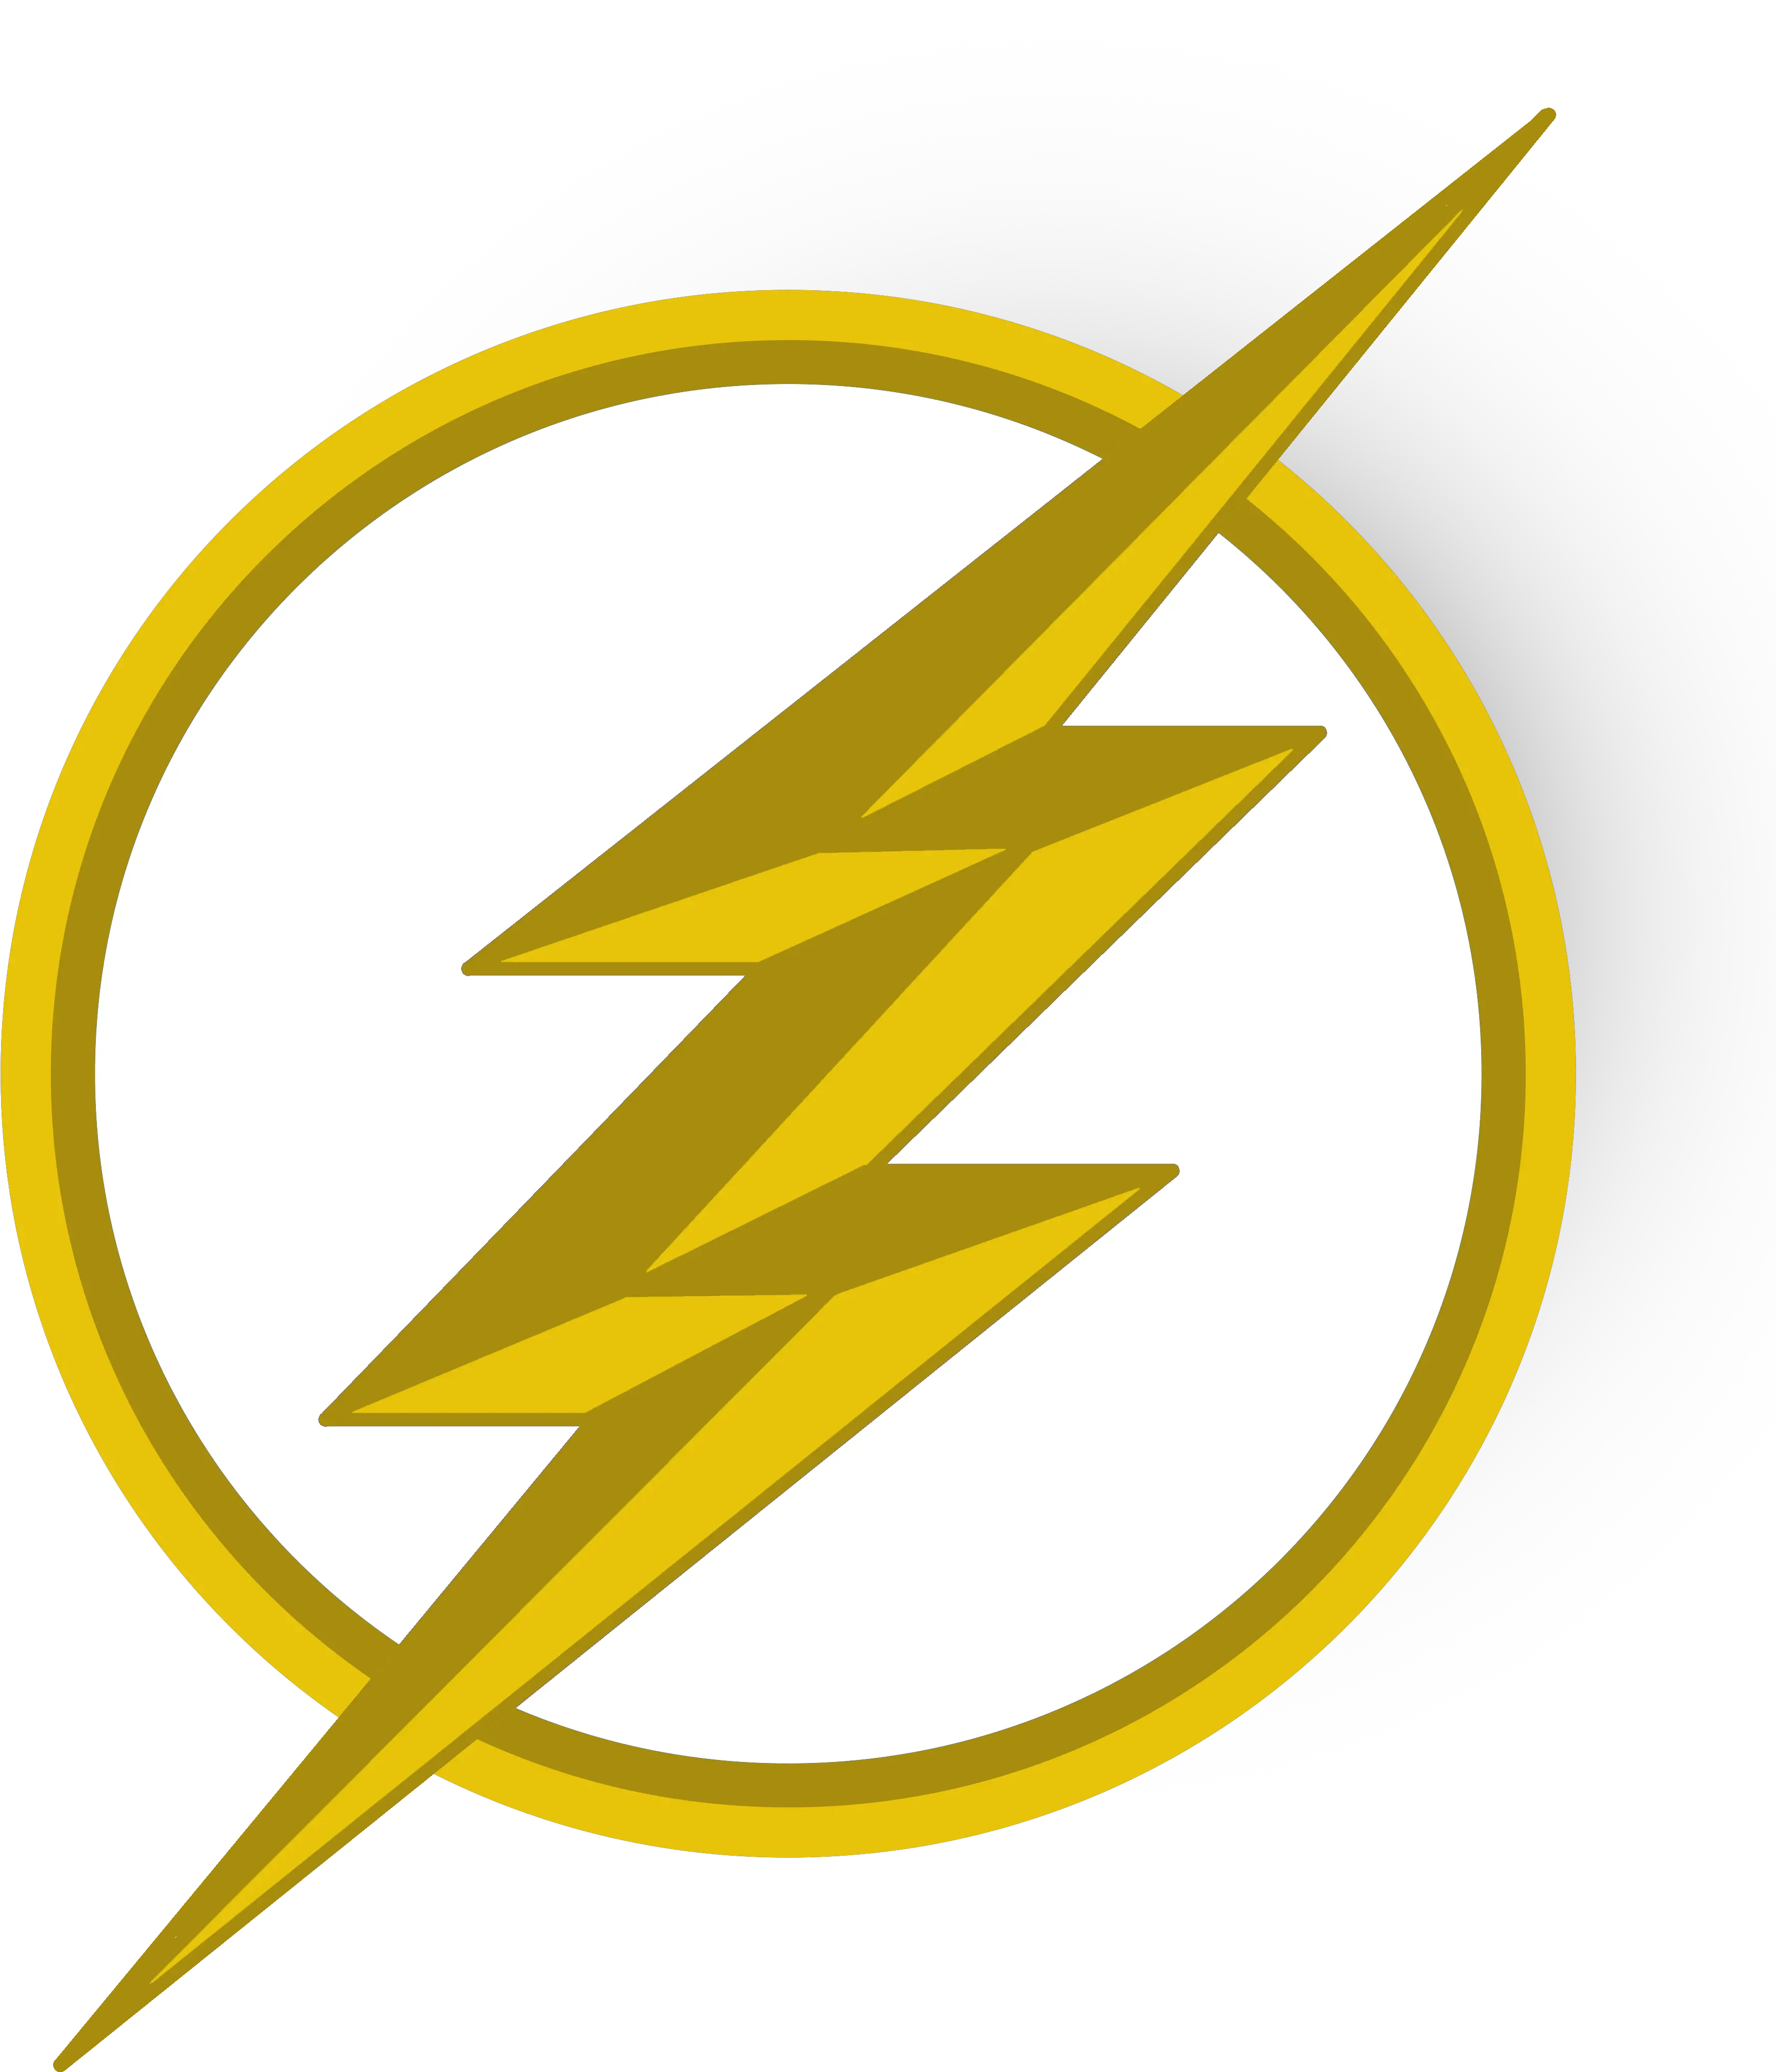 The Flash Cw Logo Png 8 Image Flash Season 2 Cw Logo